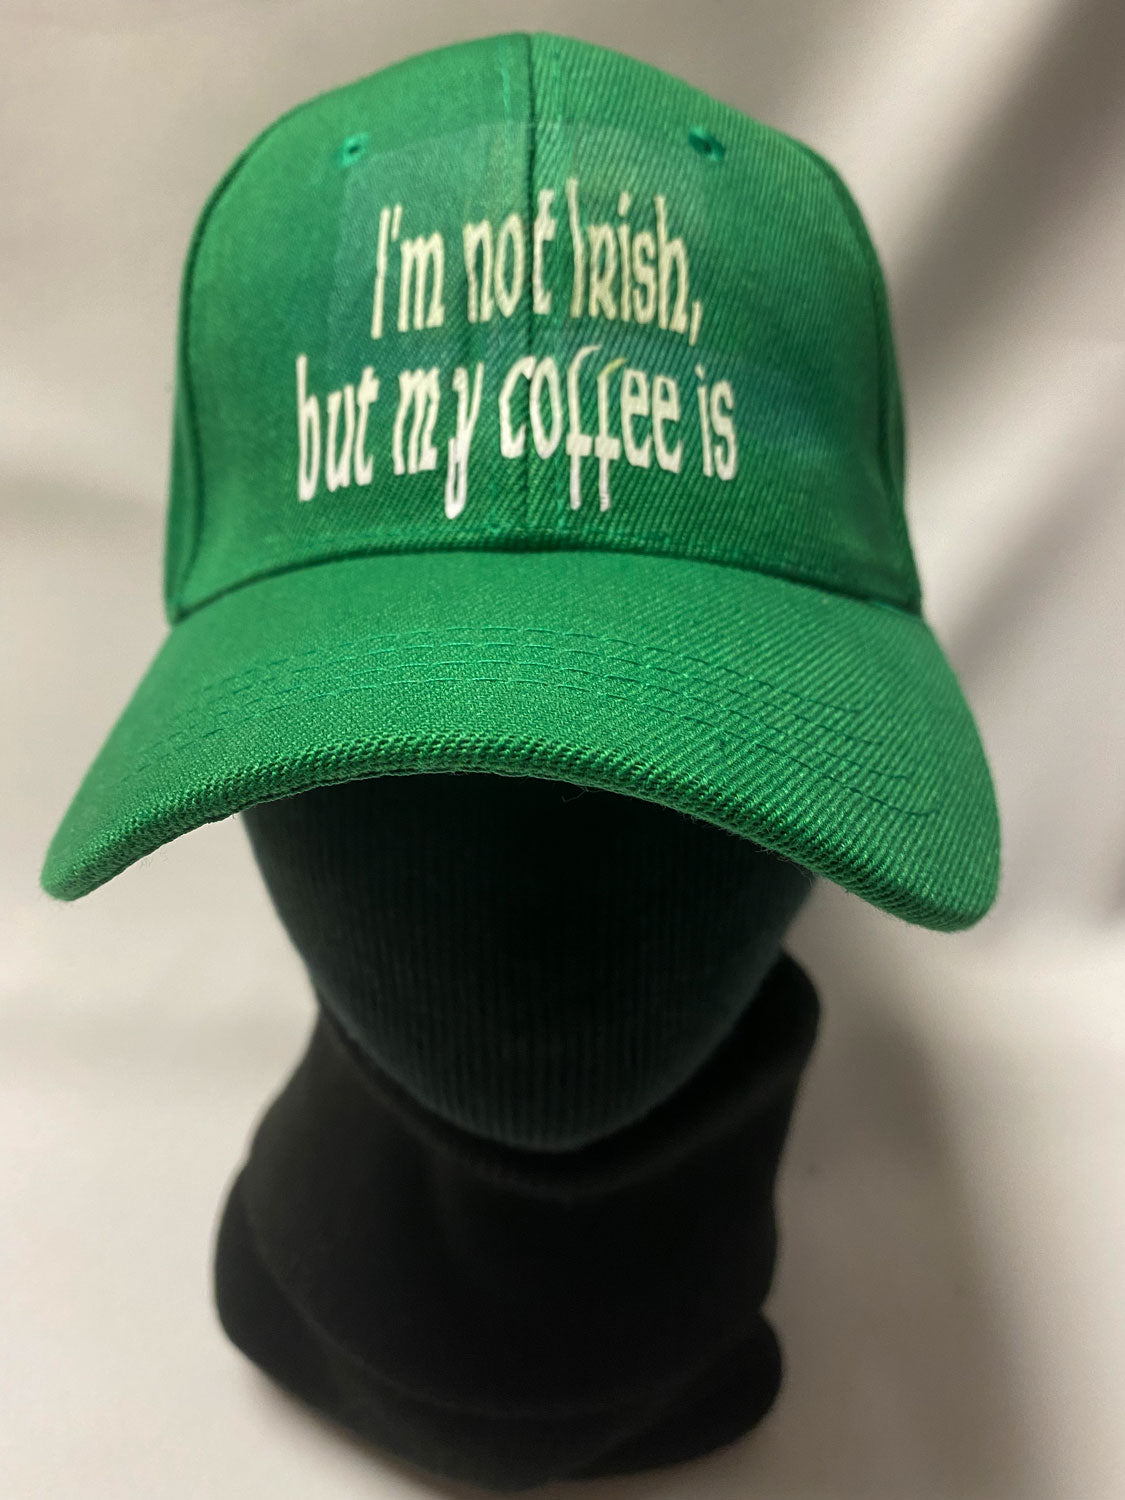 BALL CAP: "I'm not Irish" but...